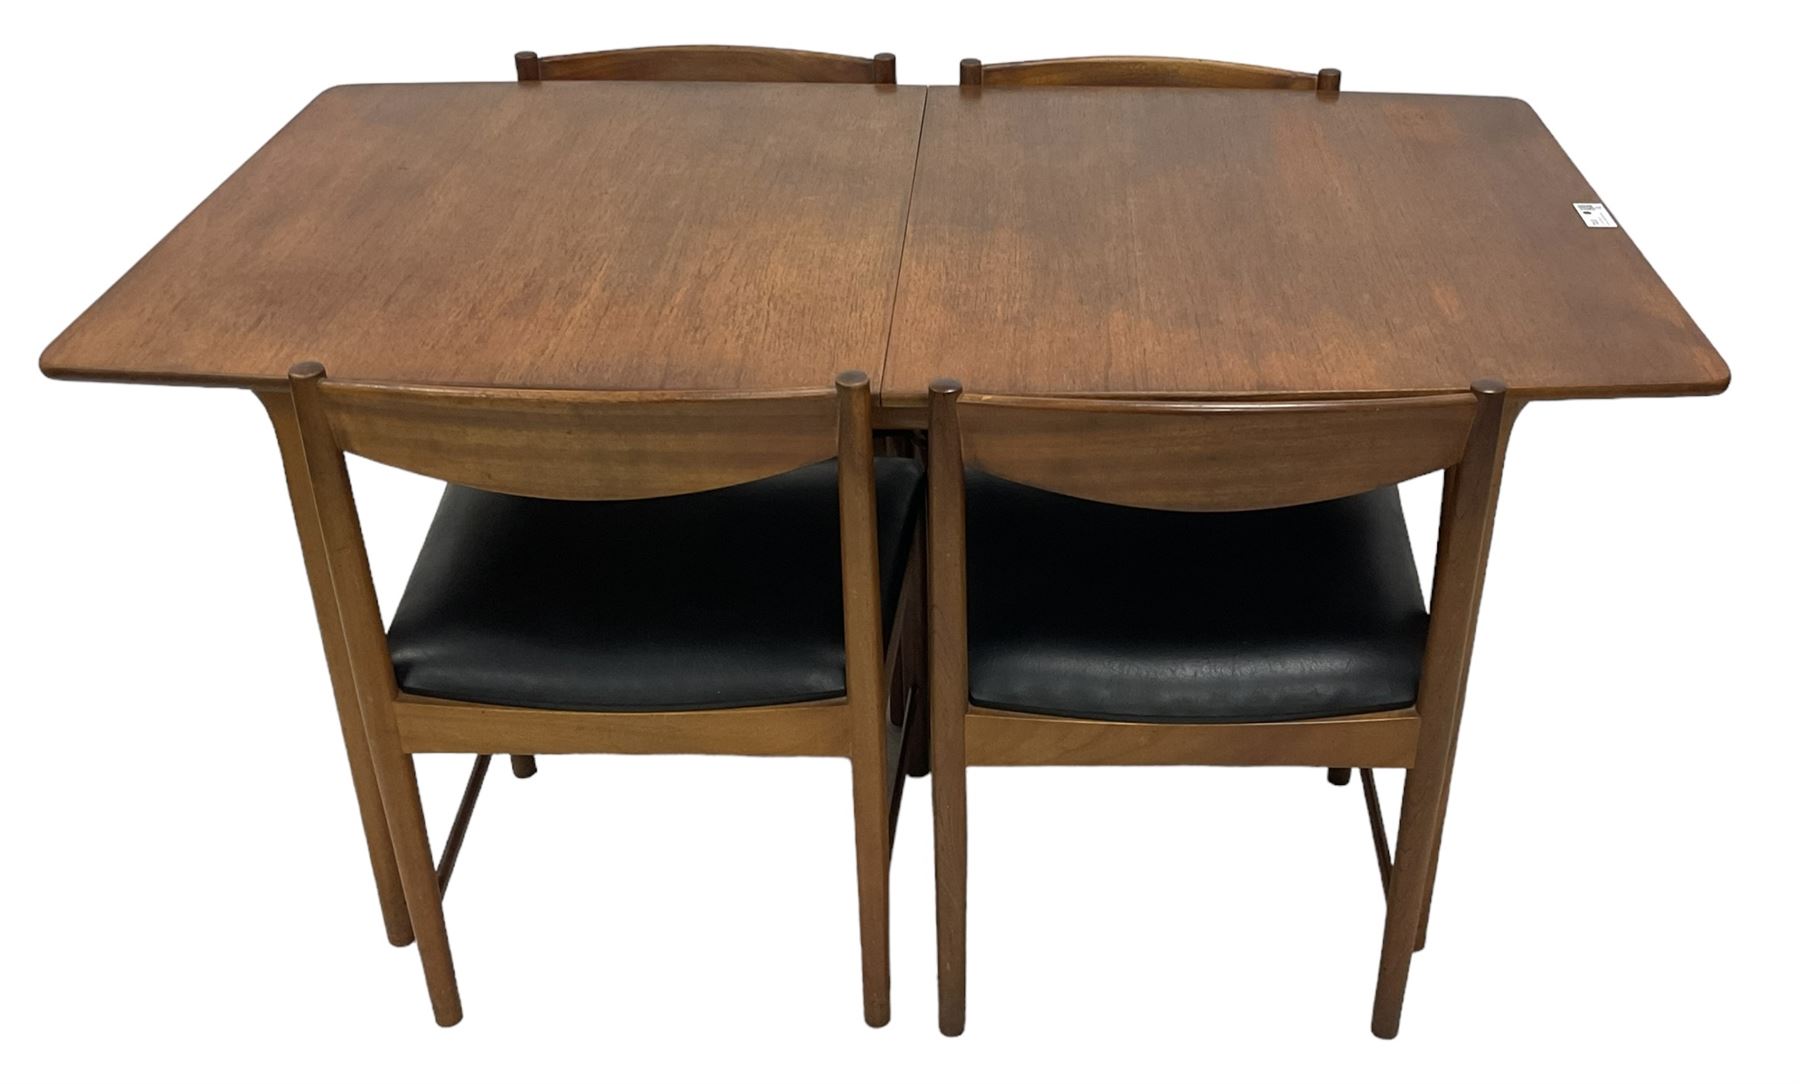 Tom Robertson for AH McIntosh & Co of Kirkaldy - mid-20th century teak extending dining table